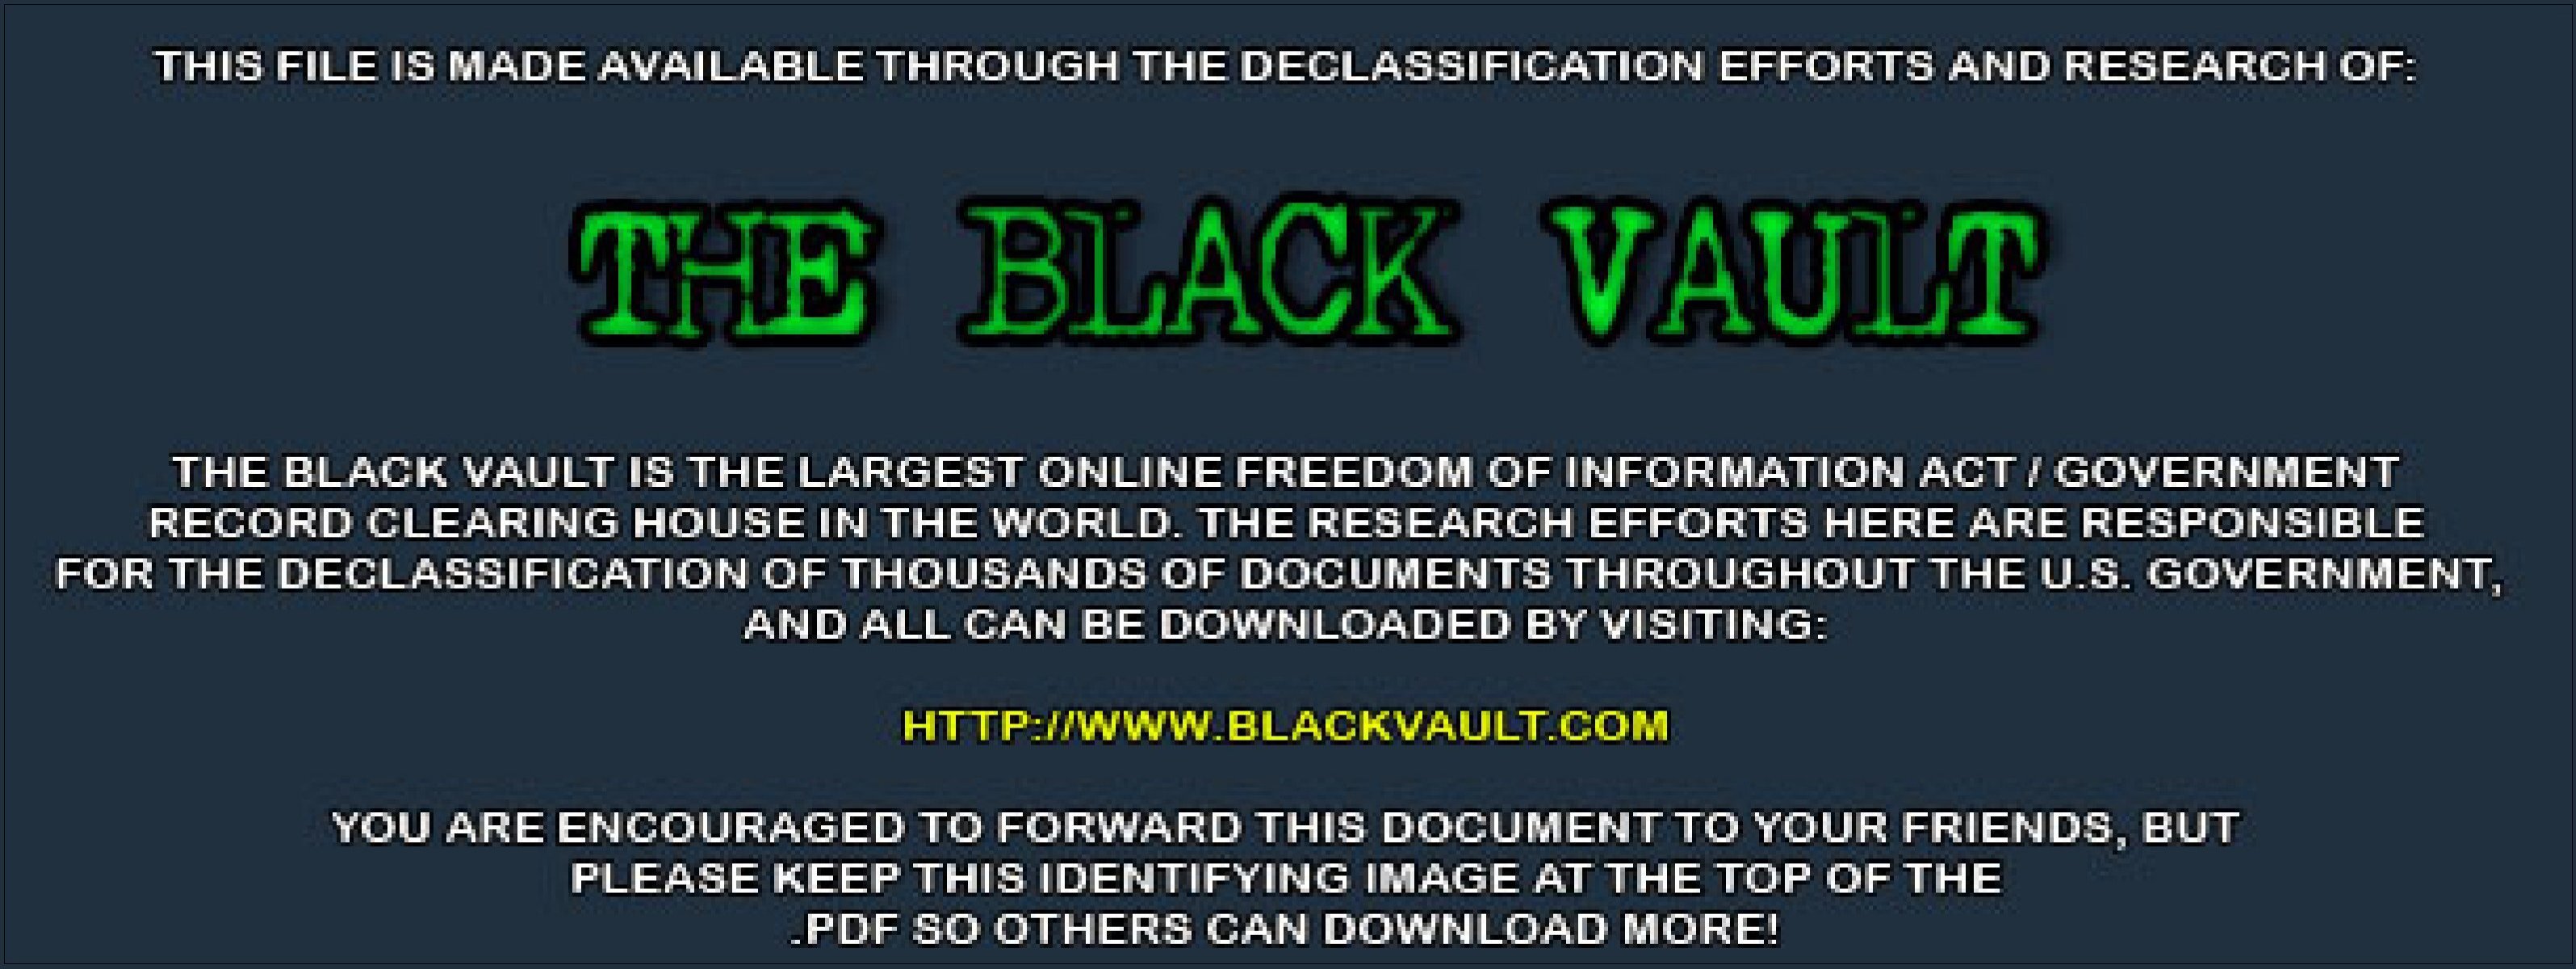 2009 - documents.blackvault.com - The Black Vault